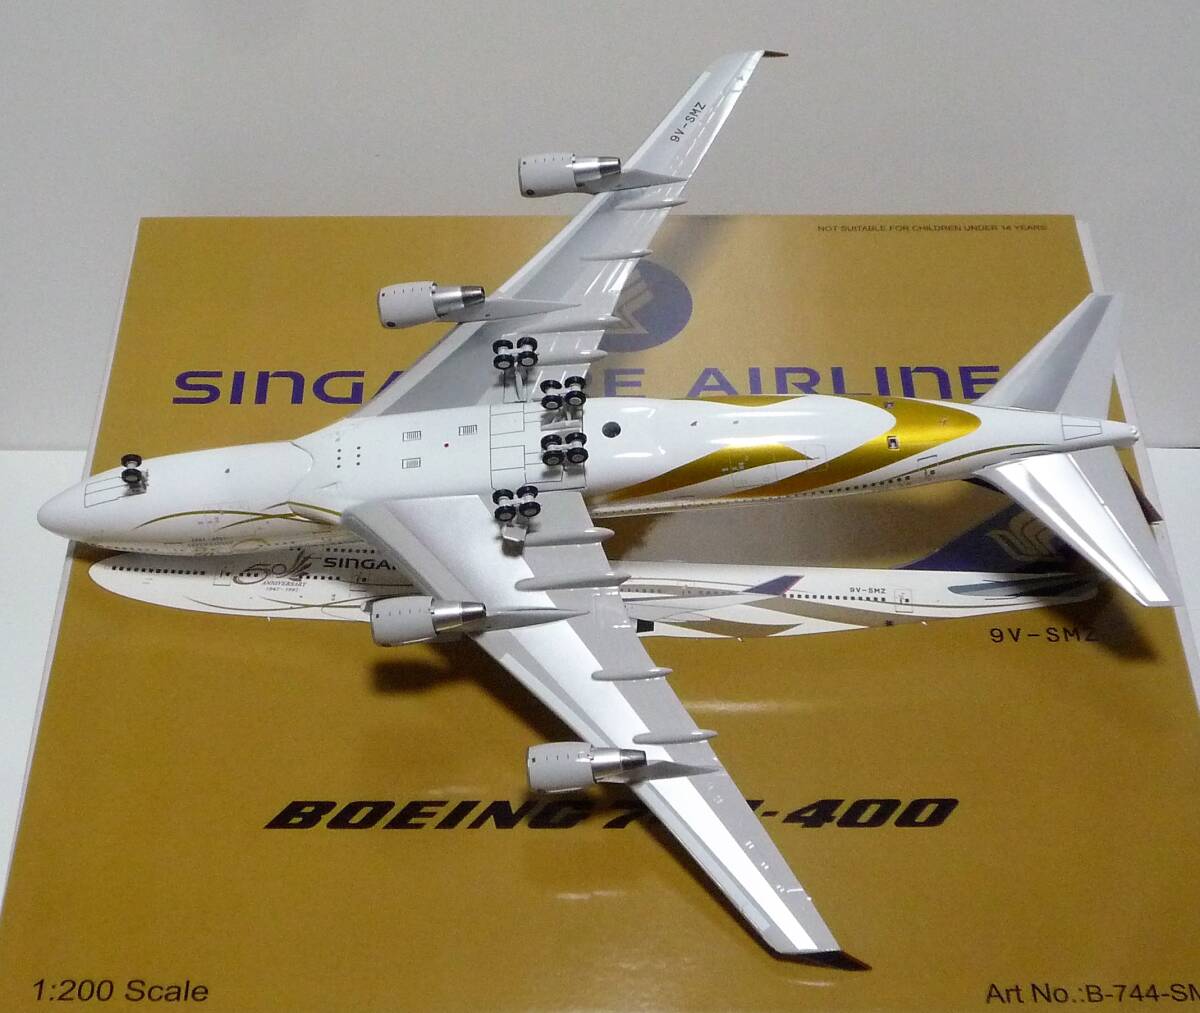  B-Models（1/200）シンガポール航空 747-400 9V-SMZ「50th Anniversary」_画像3